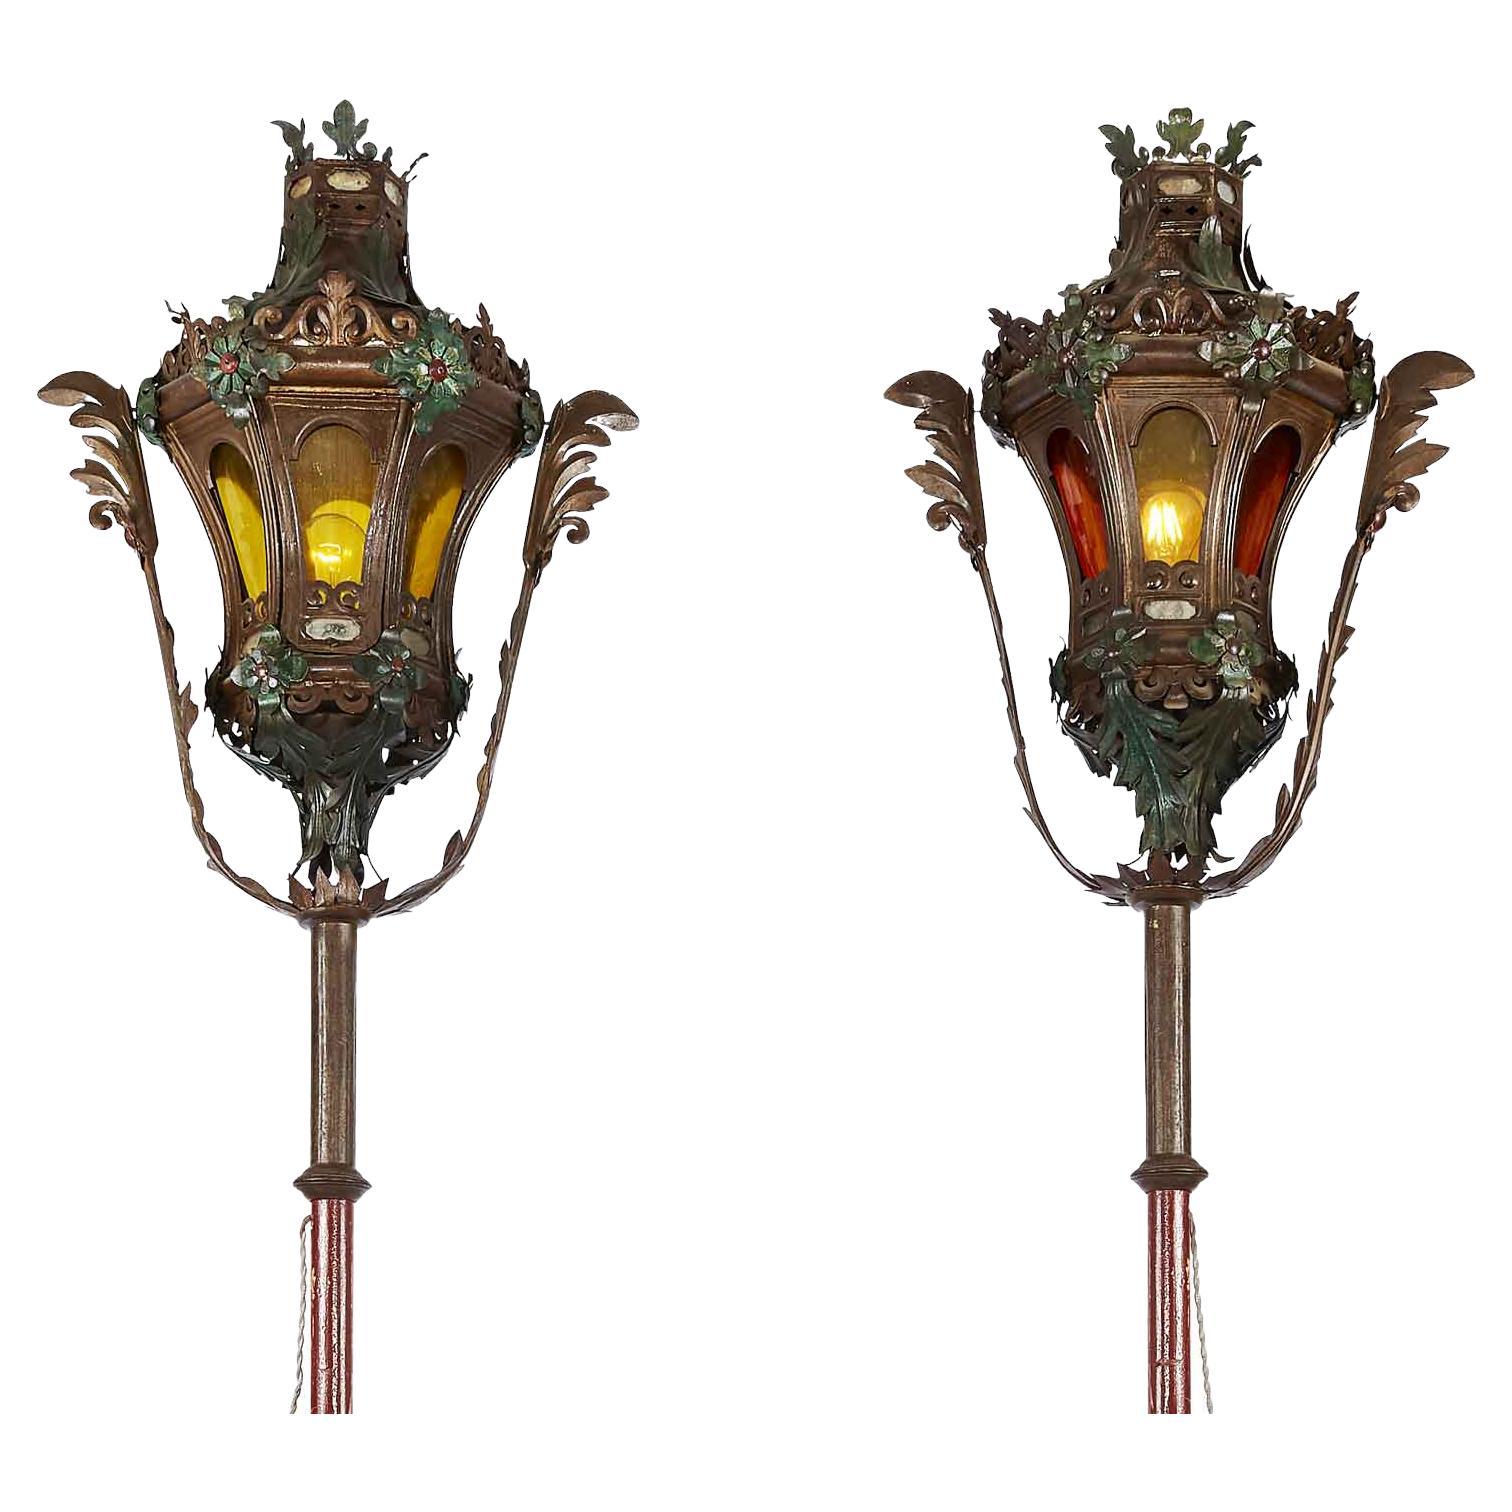 Pair of Venetian Lanterns 19th Century Italian Gondola Lamps Baroque Style For Sale